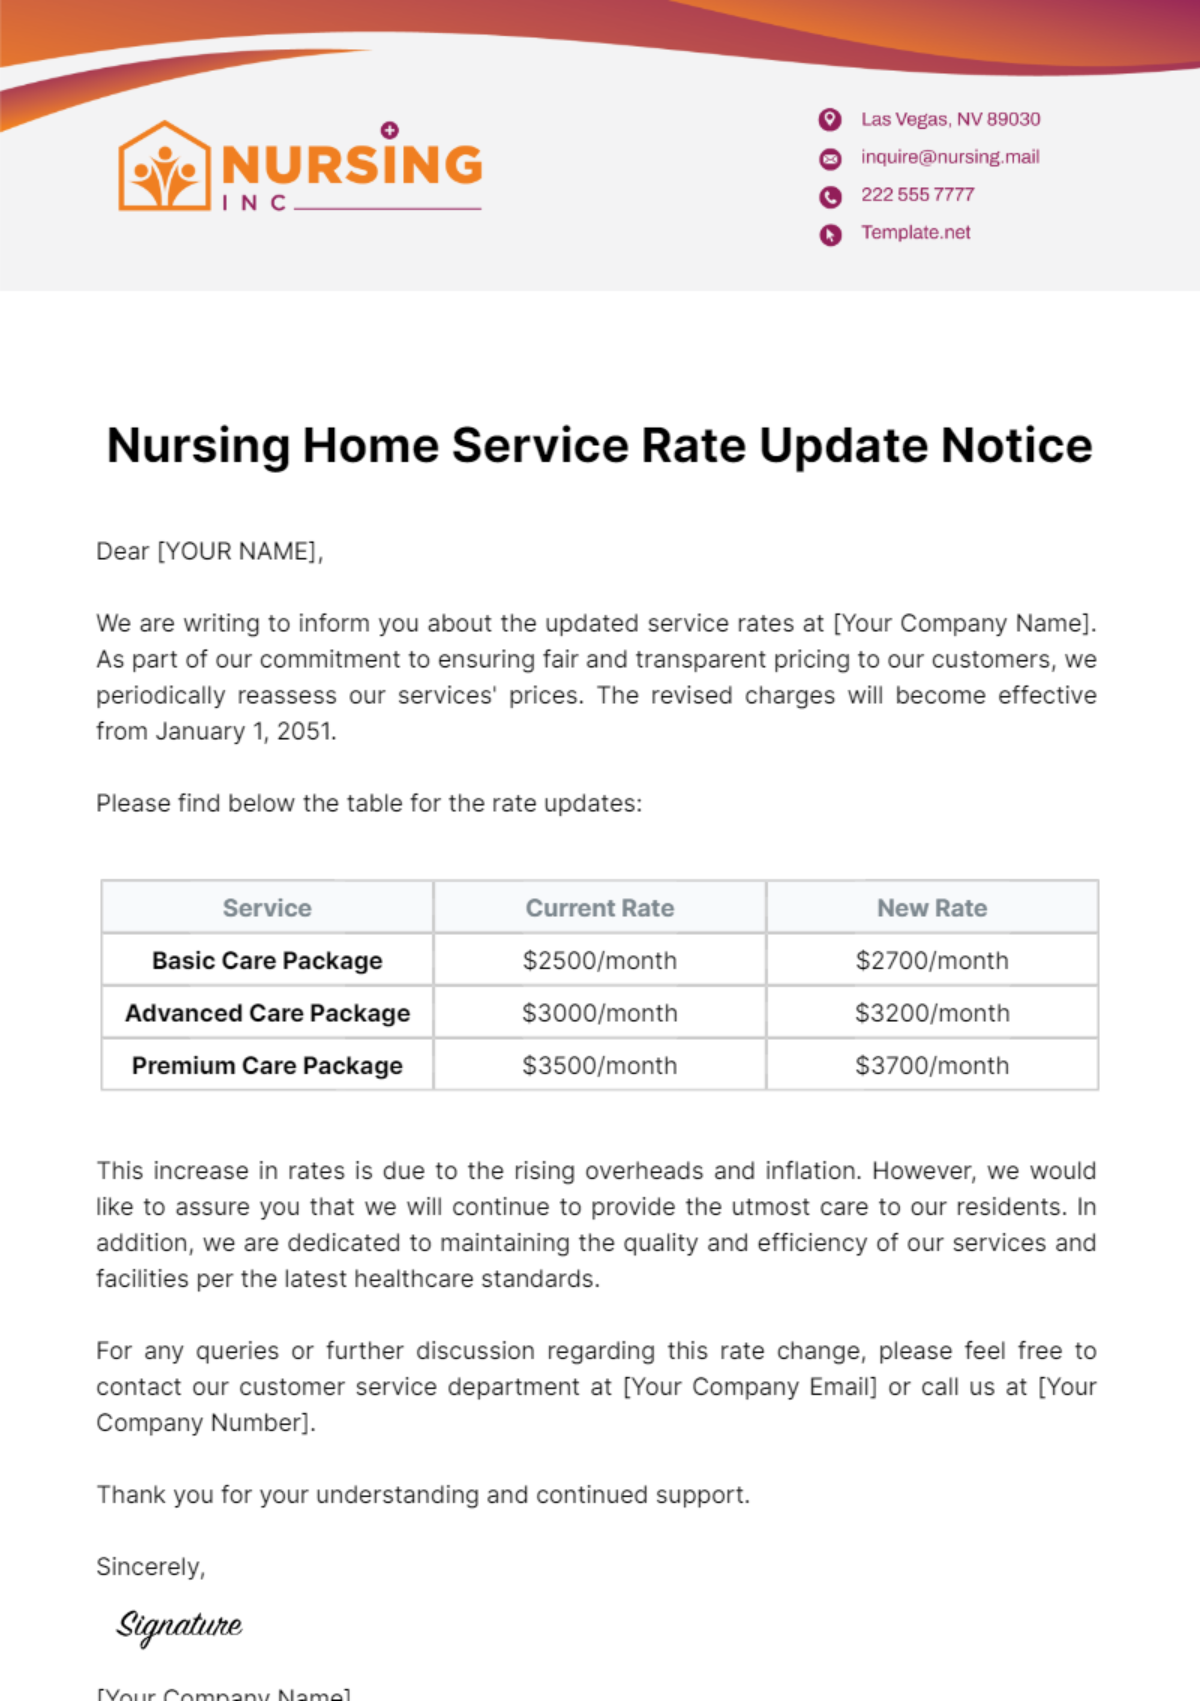 Nursing Home Service Rate Update Notice Template